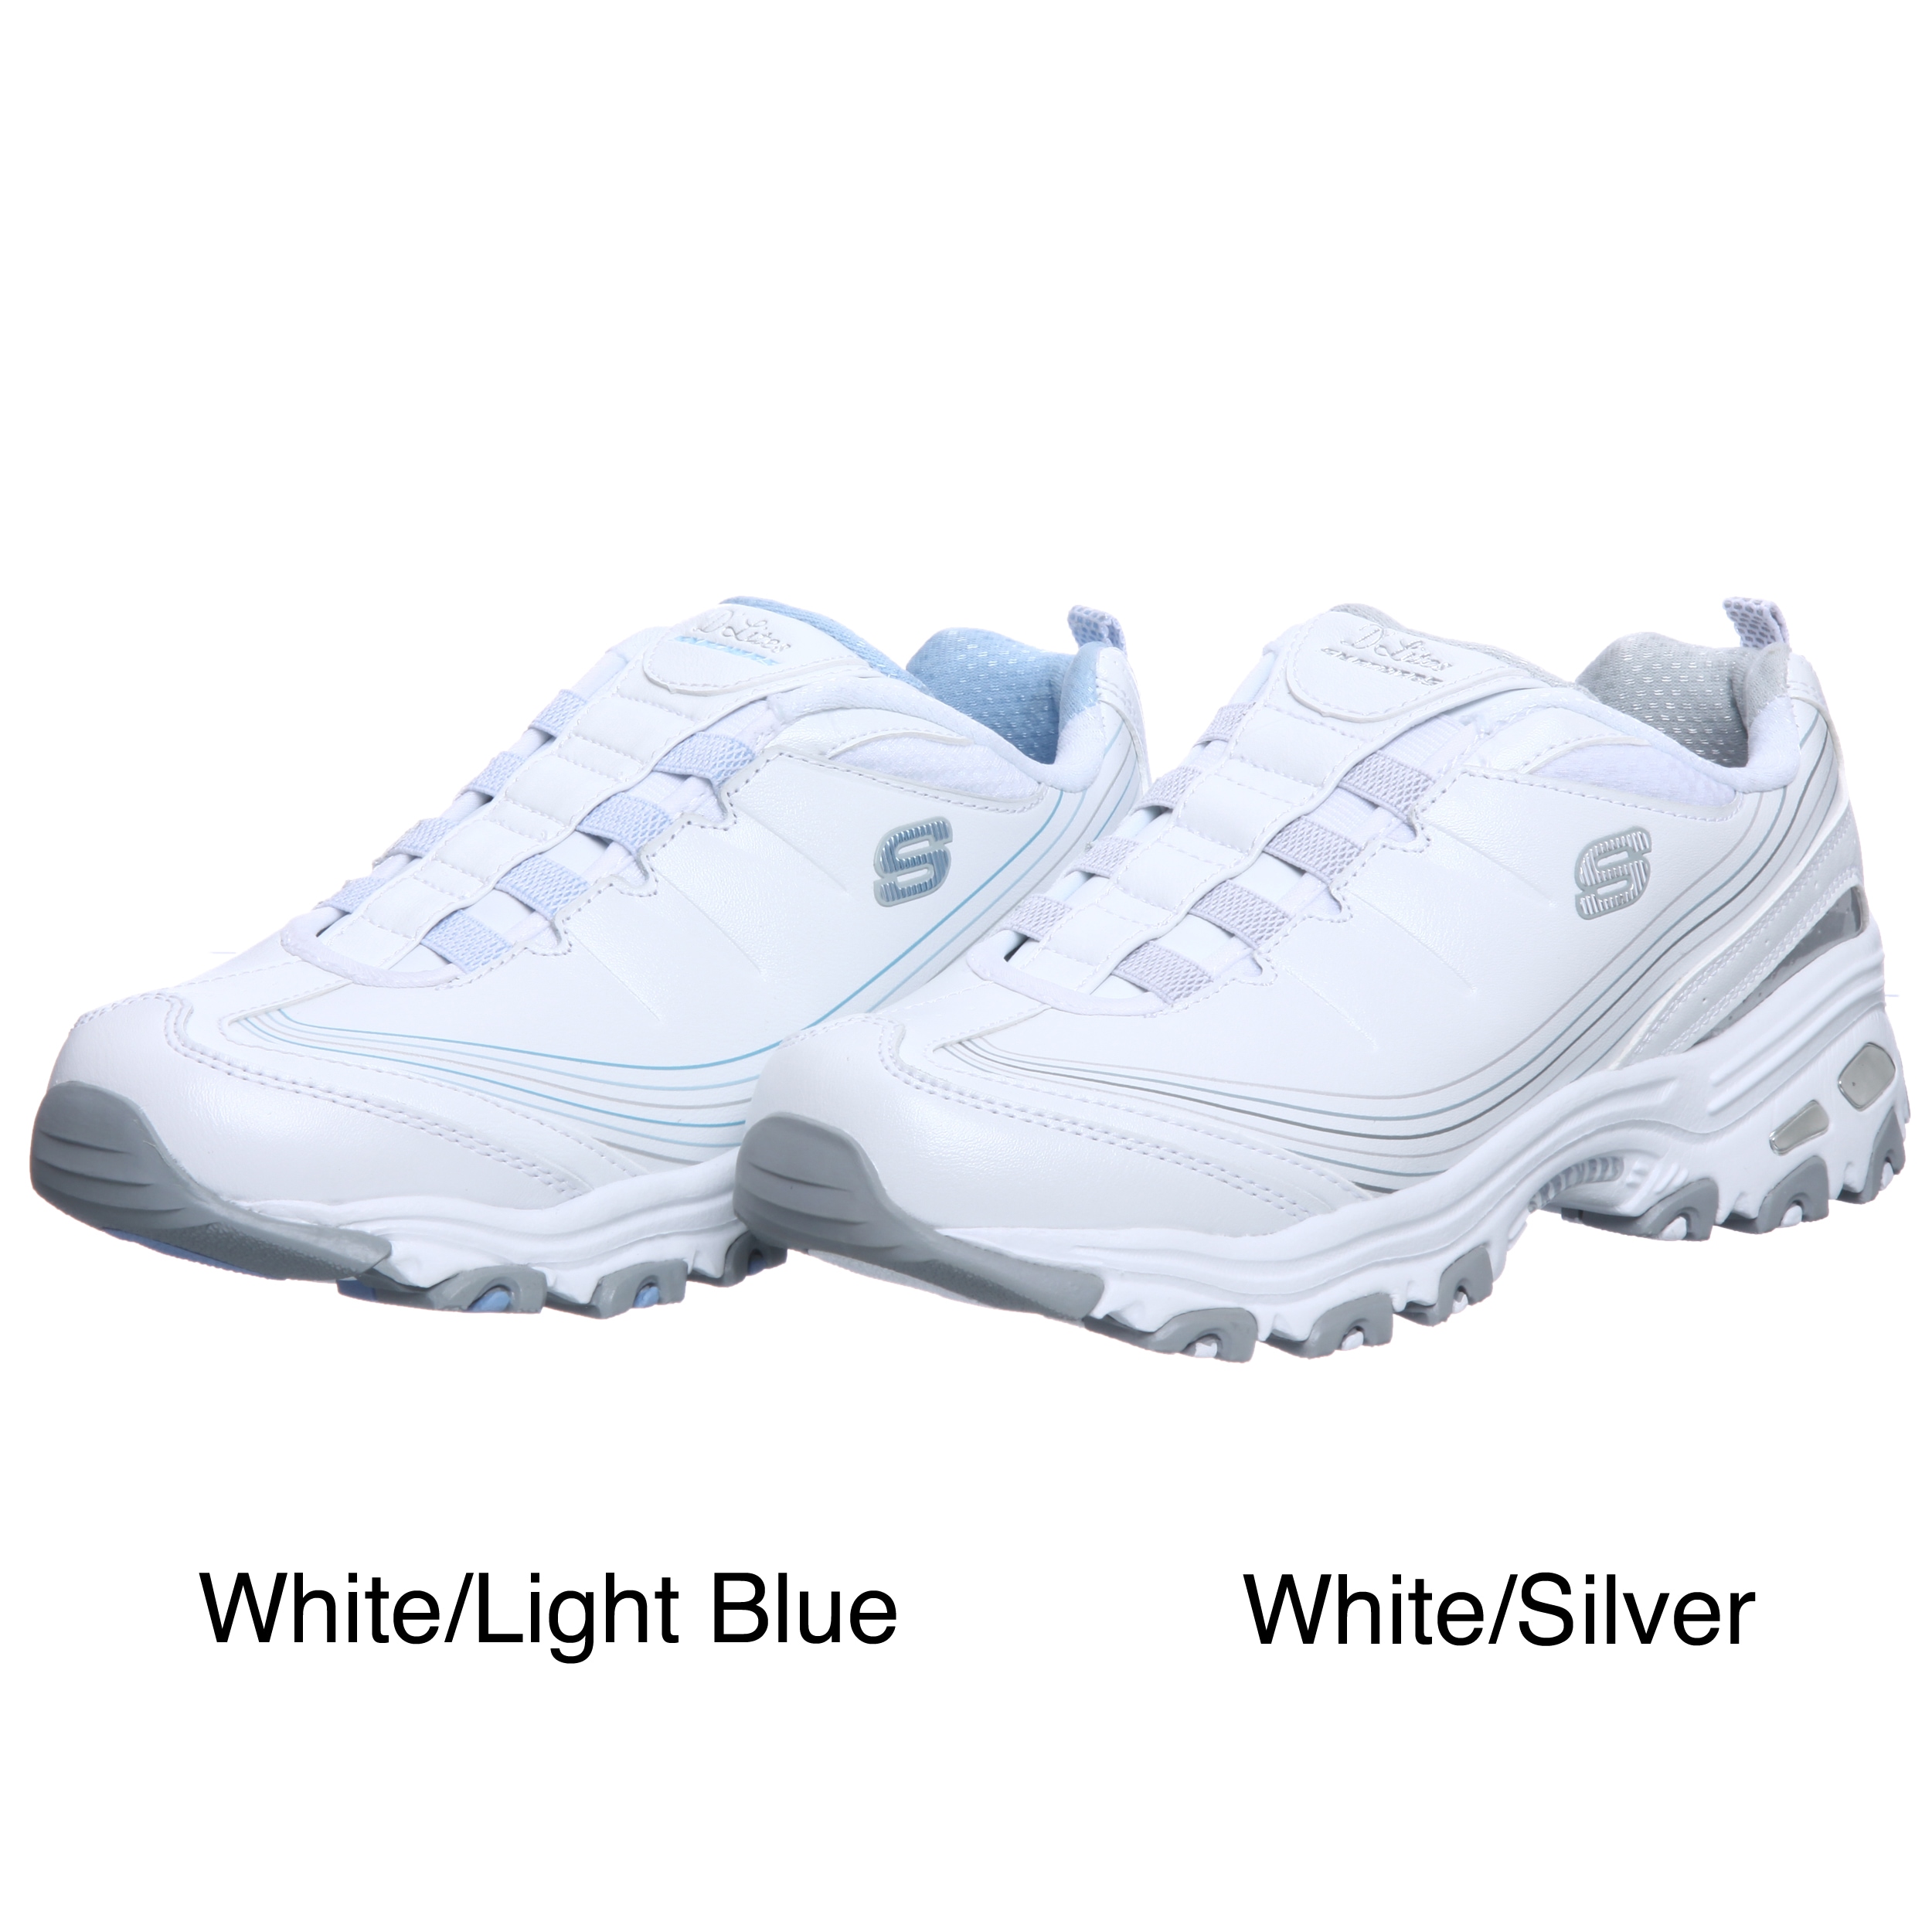 blue slip on tennis shoes